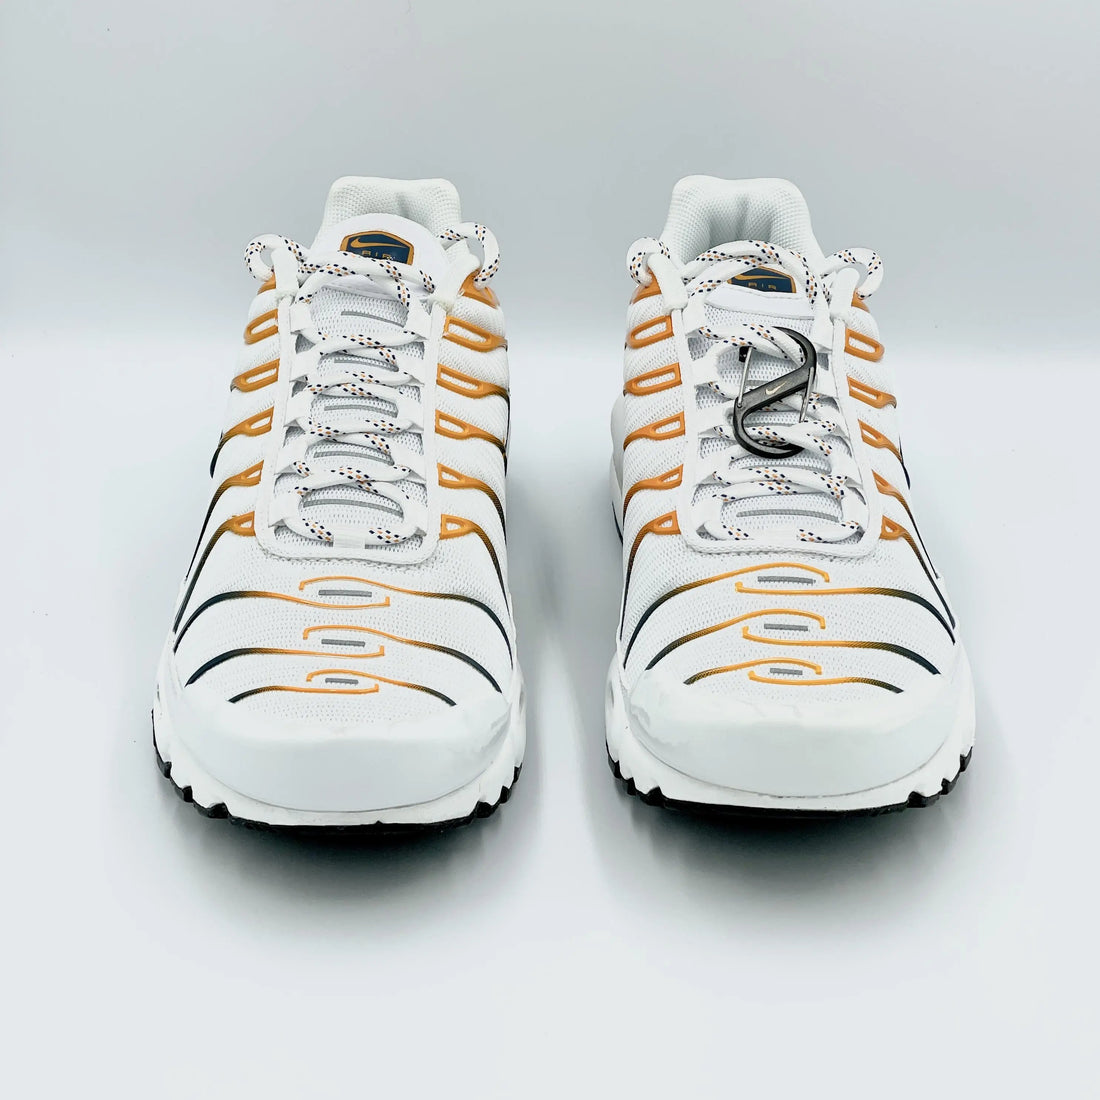 Nike TN Air Max Plus Hiking Carabiner White  SA Sneakers